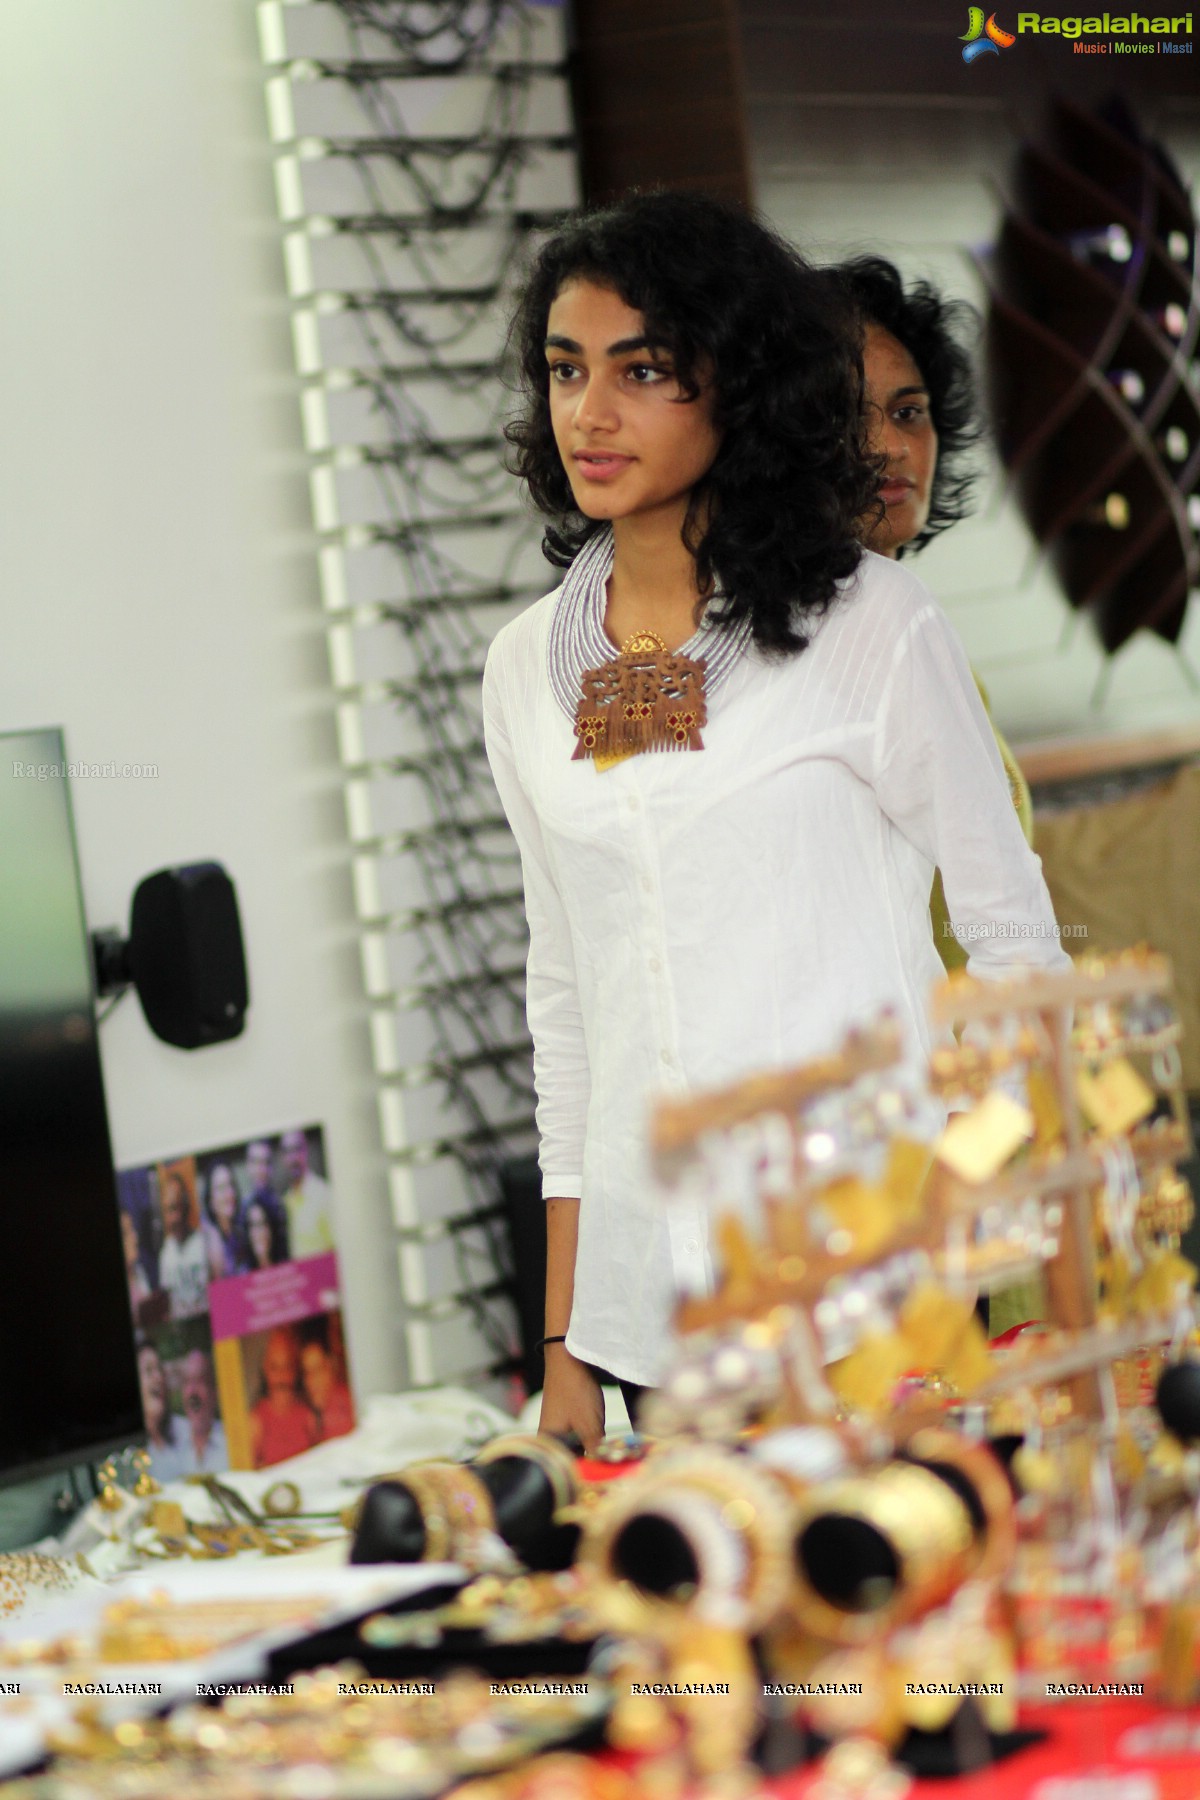 Jewellery Exhibition by Bela Mody, Sarika Jajoo and Nileema Bung